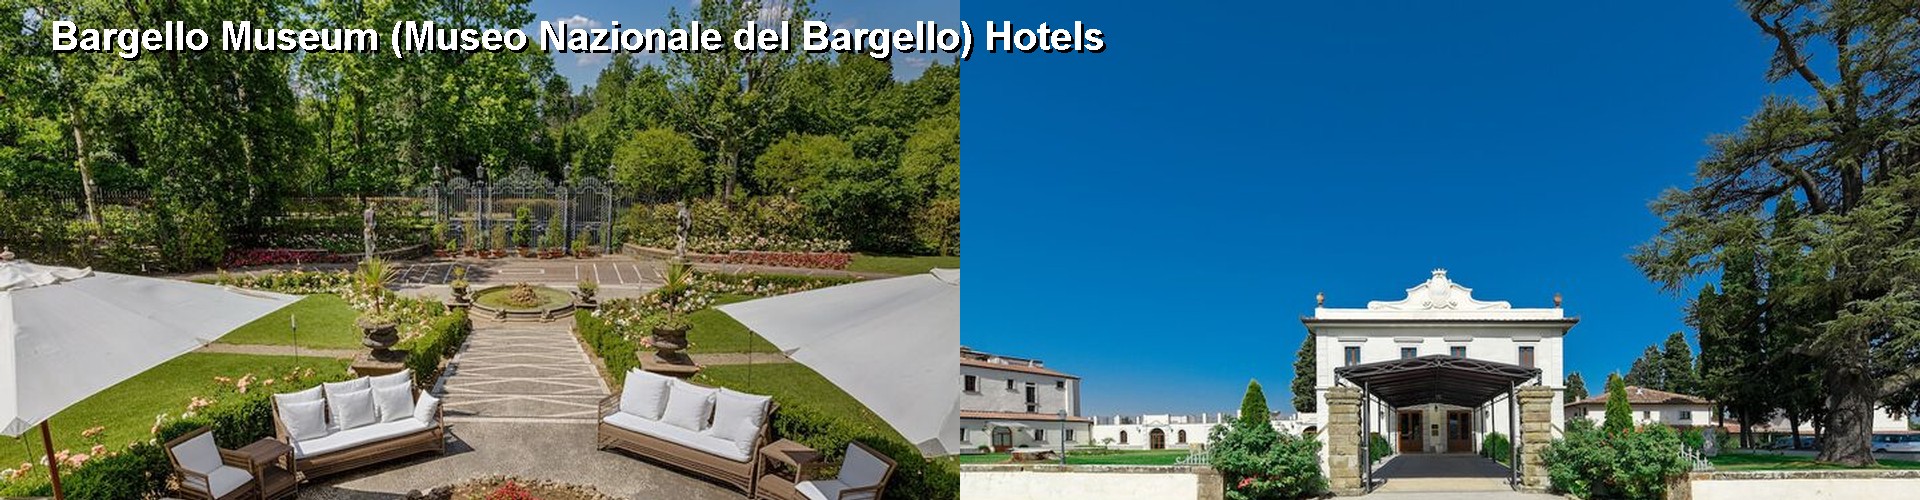 5 Best Hotels near Bargello Museum (Museo Nazionale del Bargello)